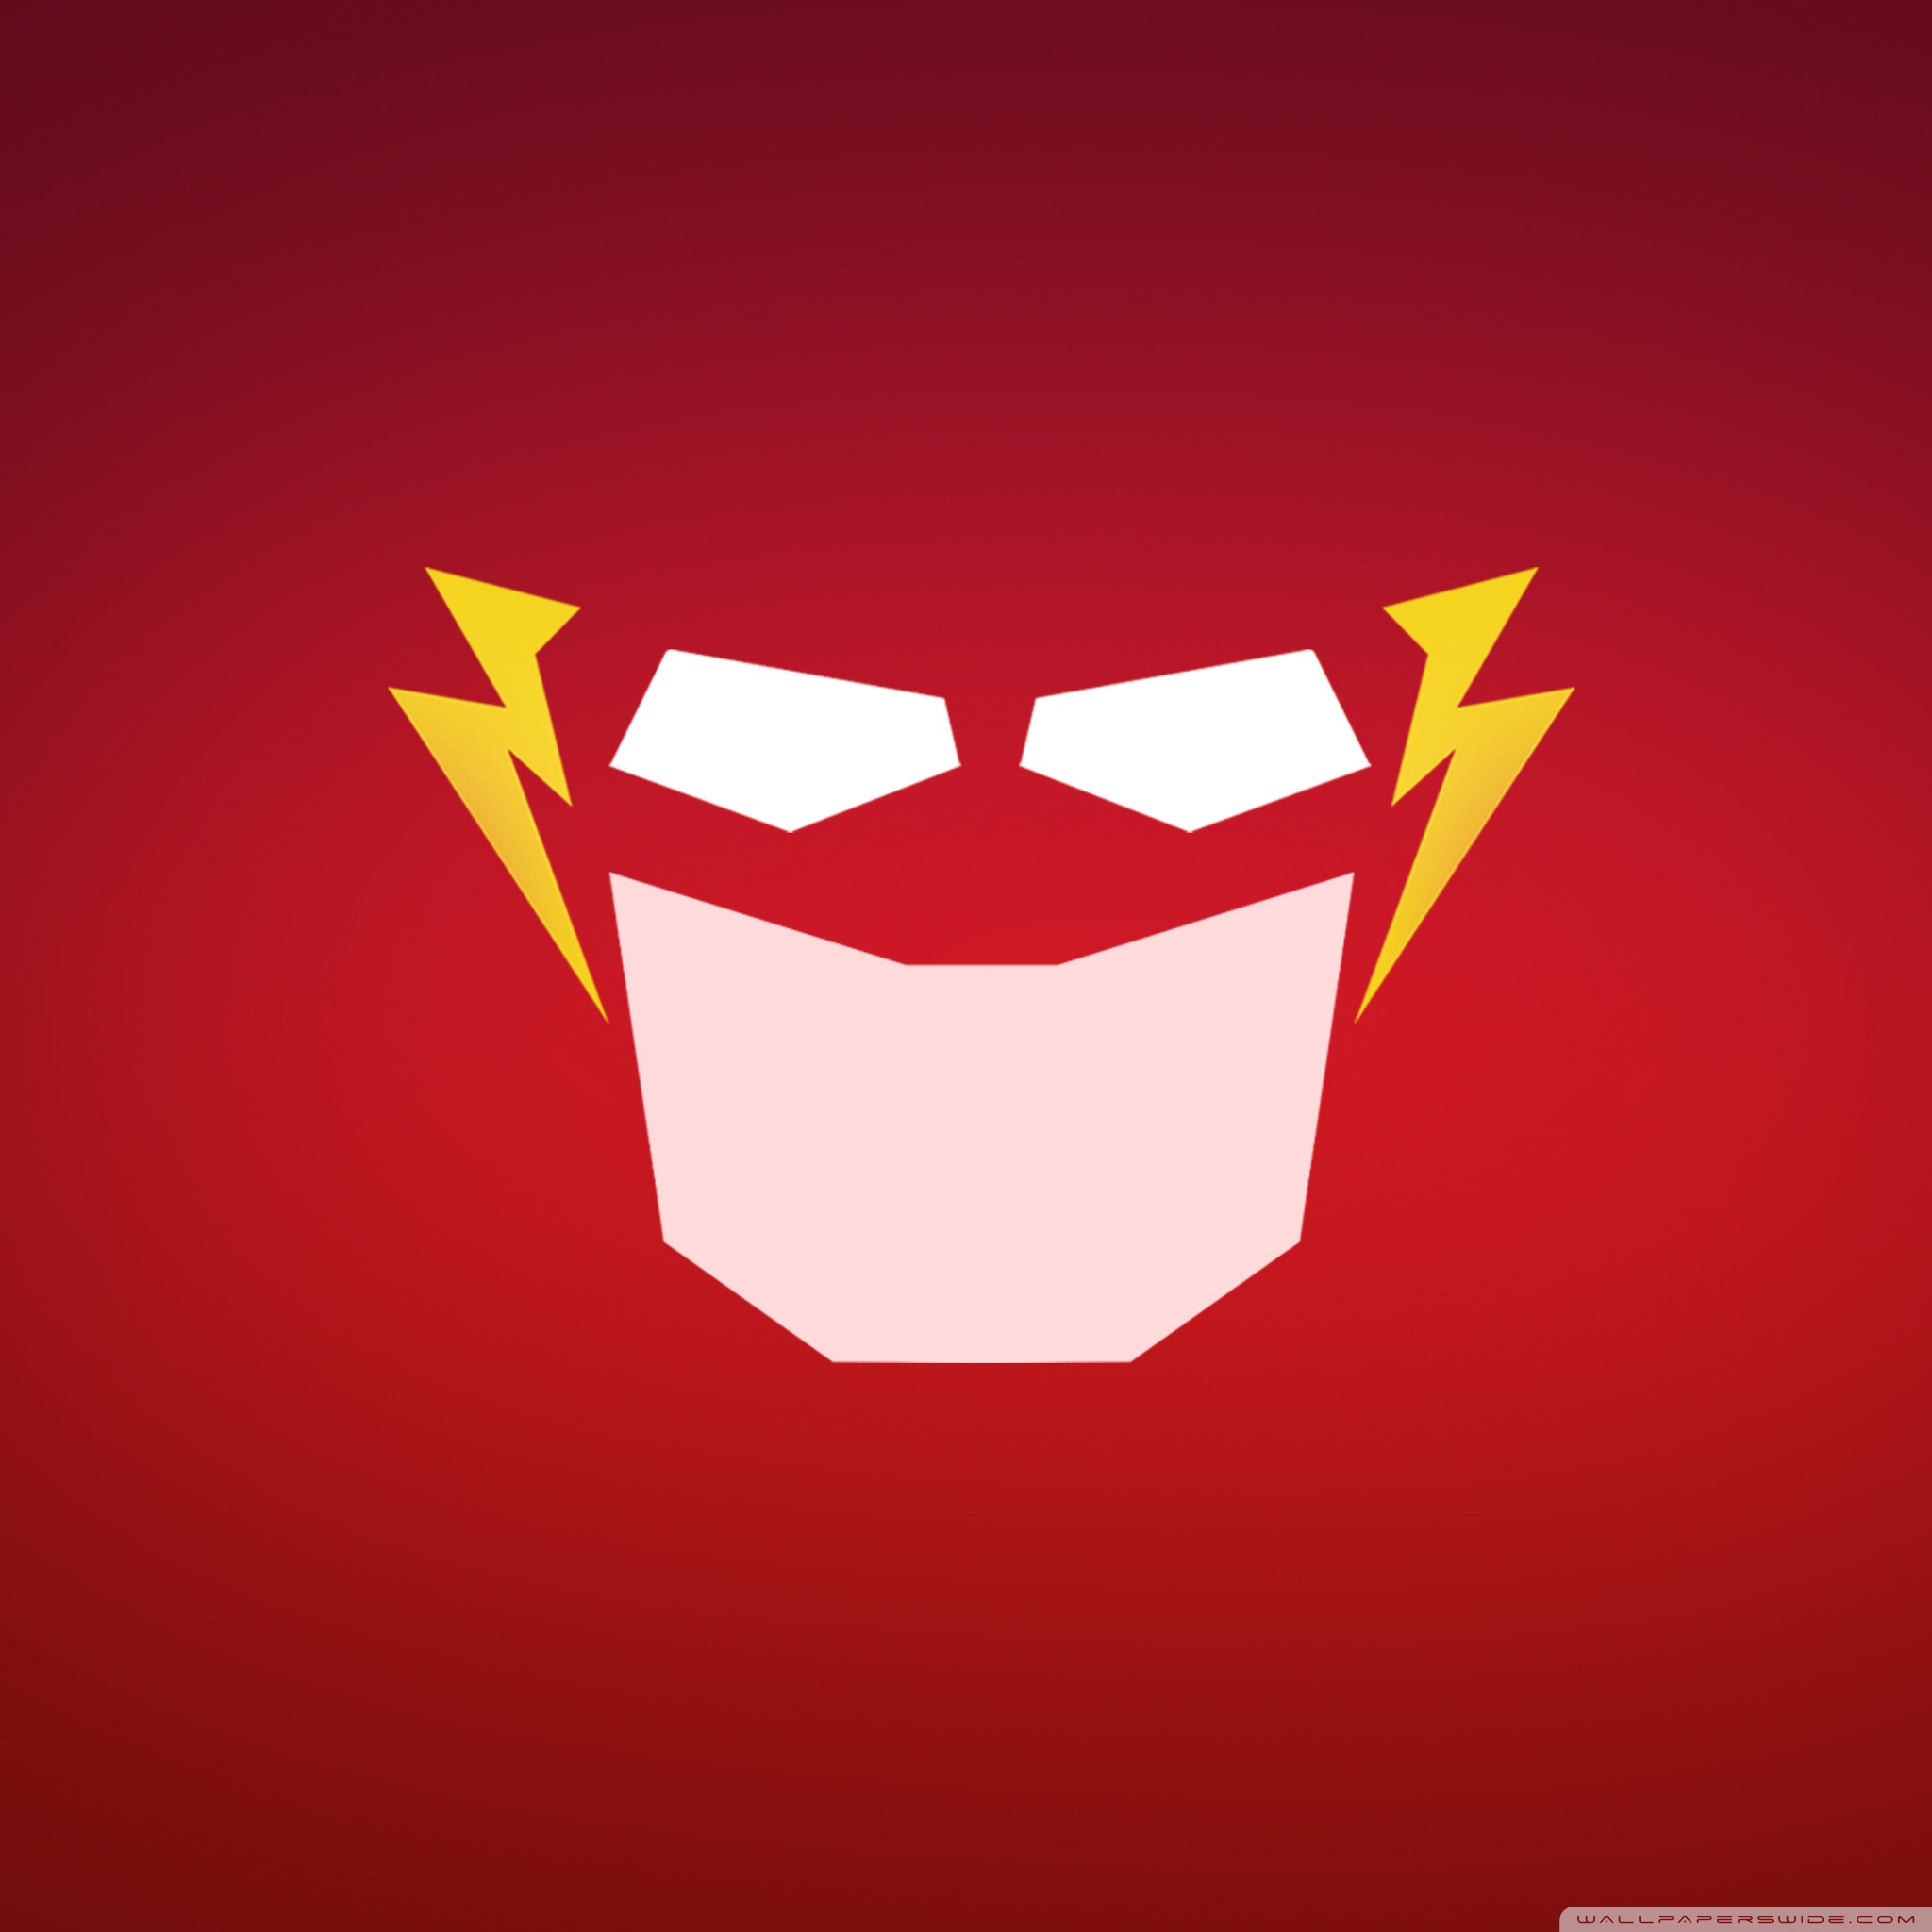 flash wallpaper,red,fictional character,illustration,superhero,graphic design